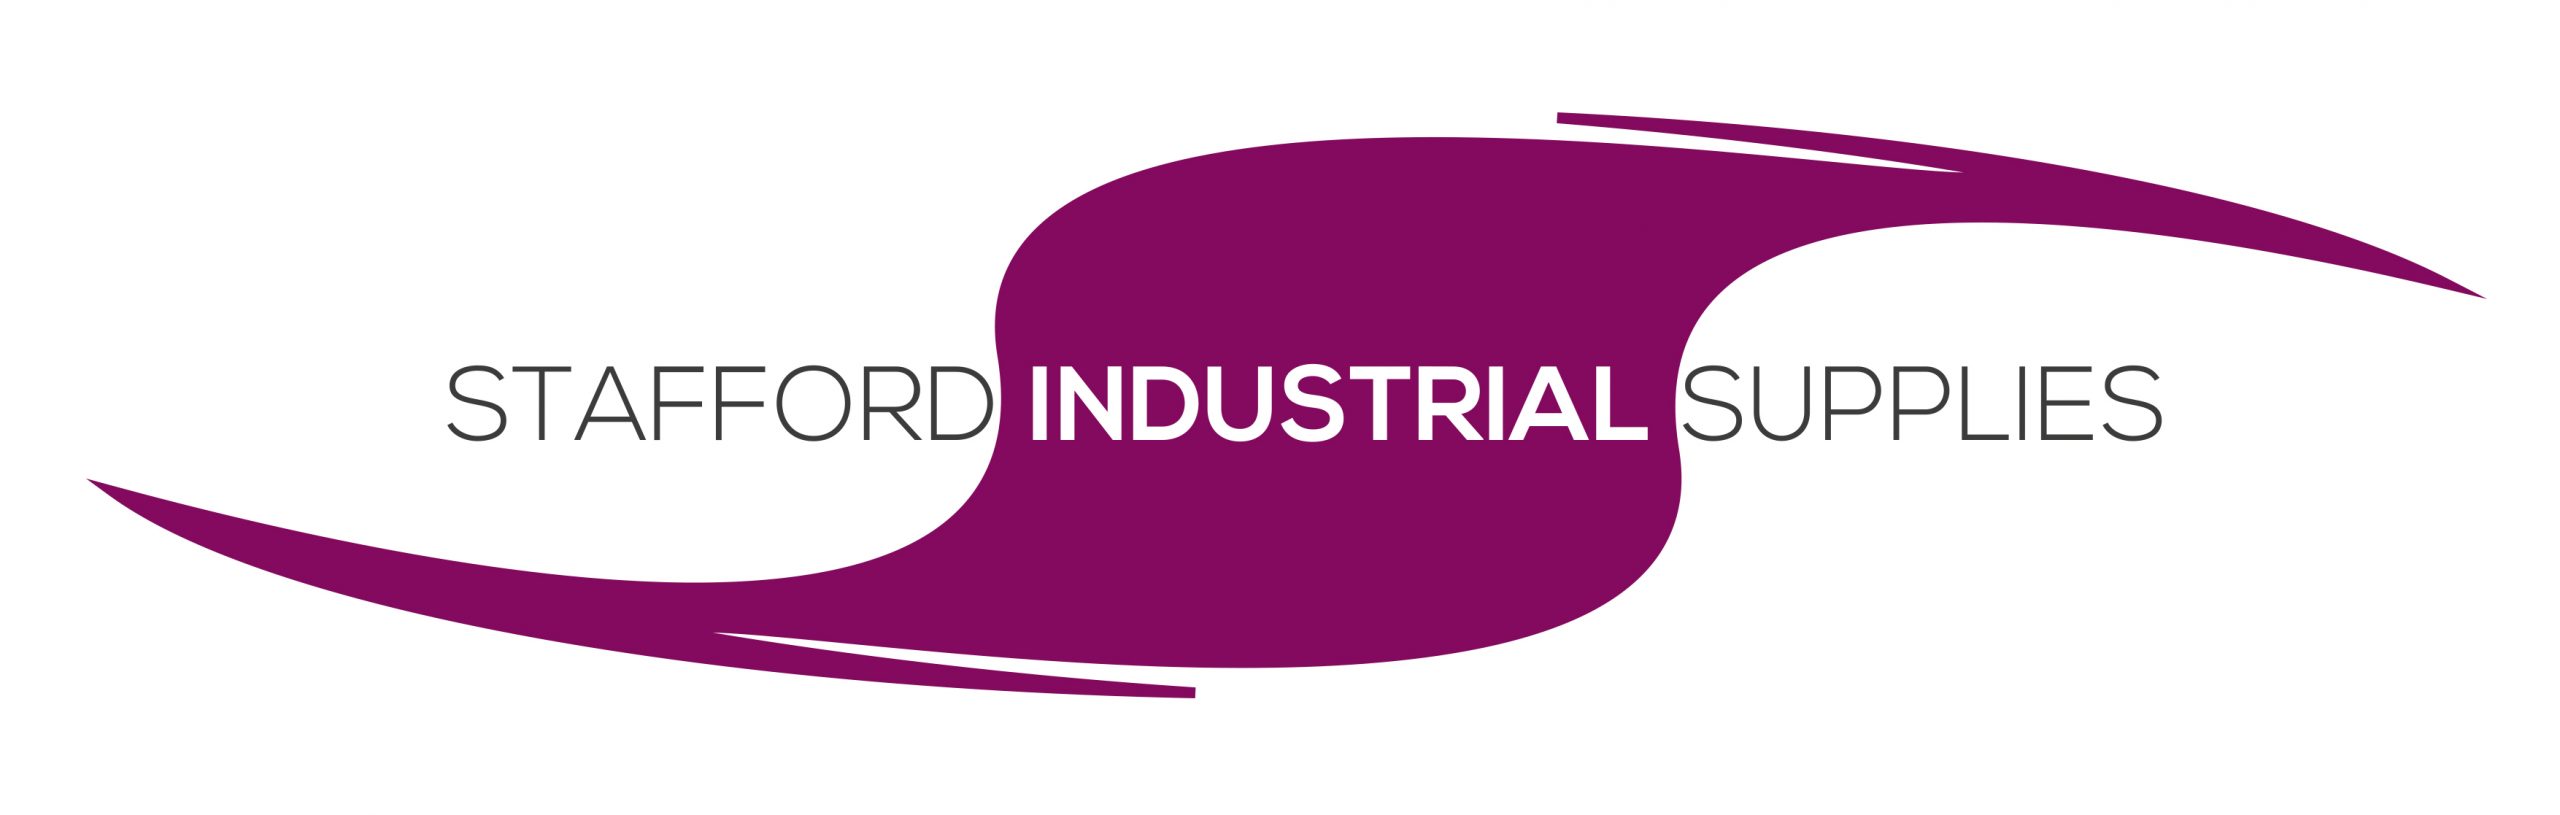 Stafford Industrial Supplies logo